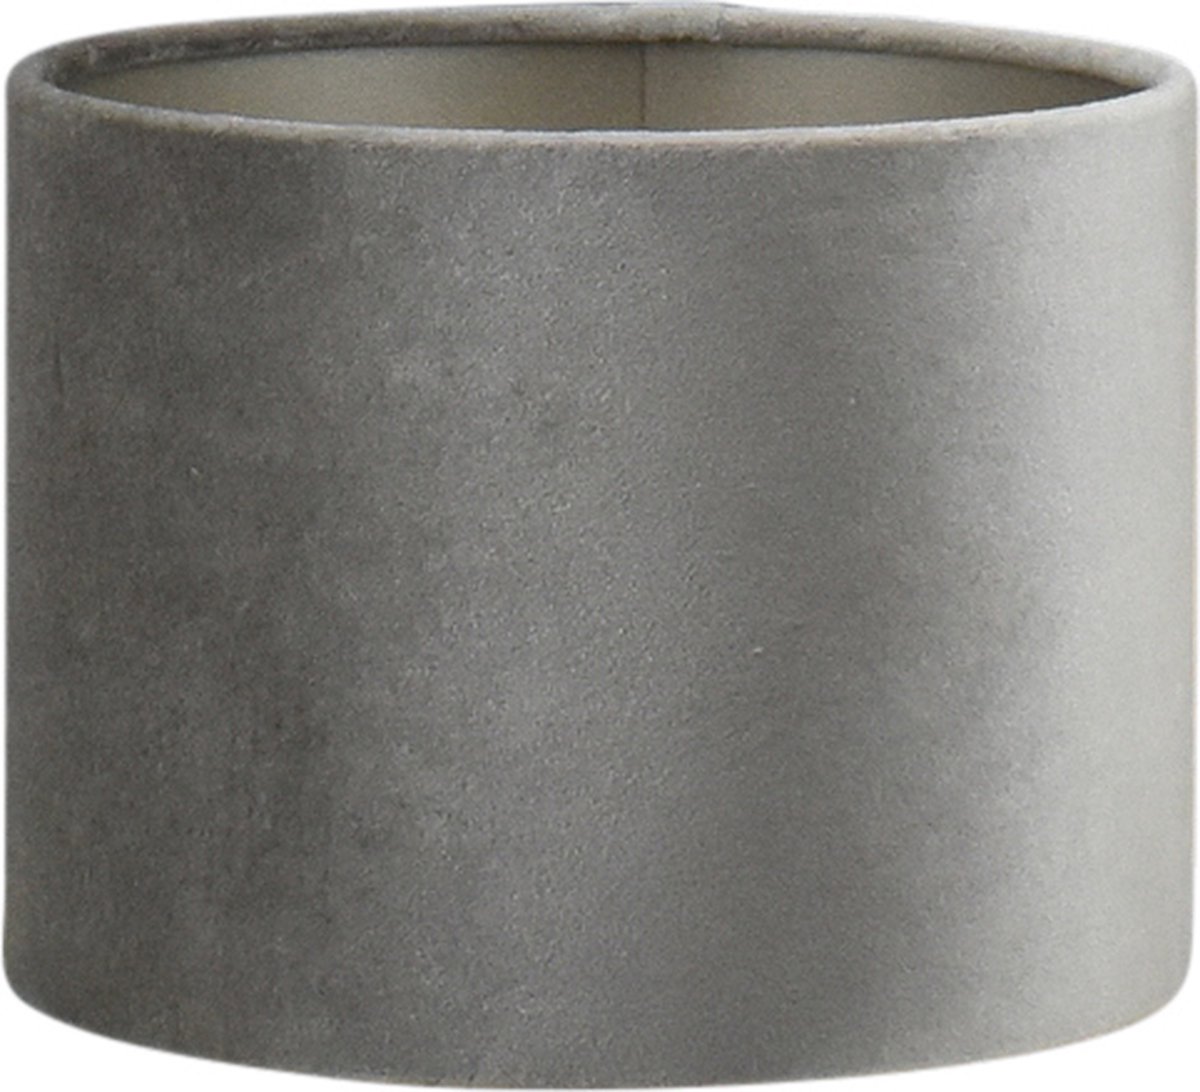 Lampenkap Cilinder - 20x20x15cm - Fendi velours zilver - taupe binnenkant